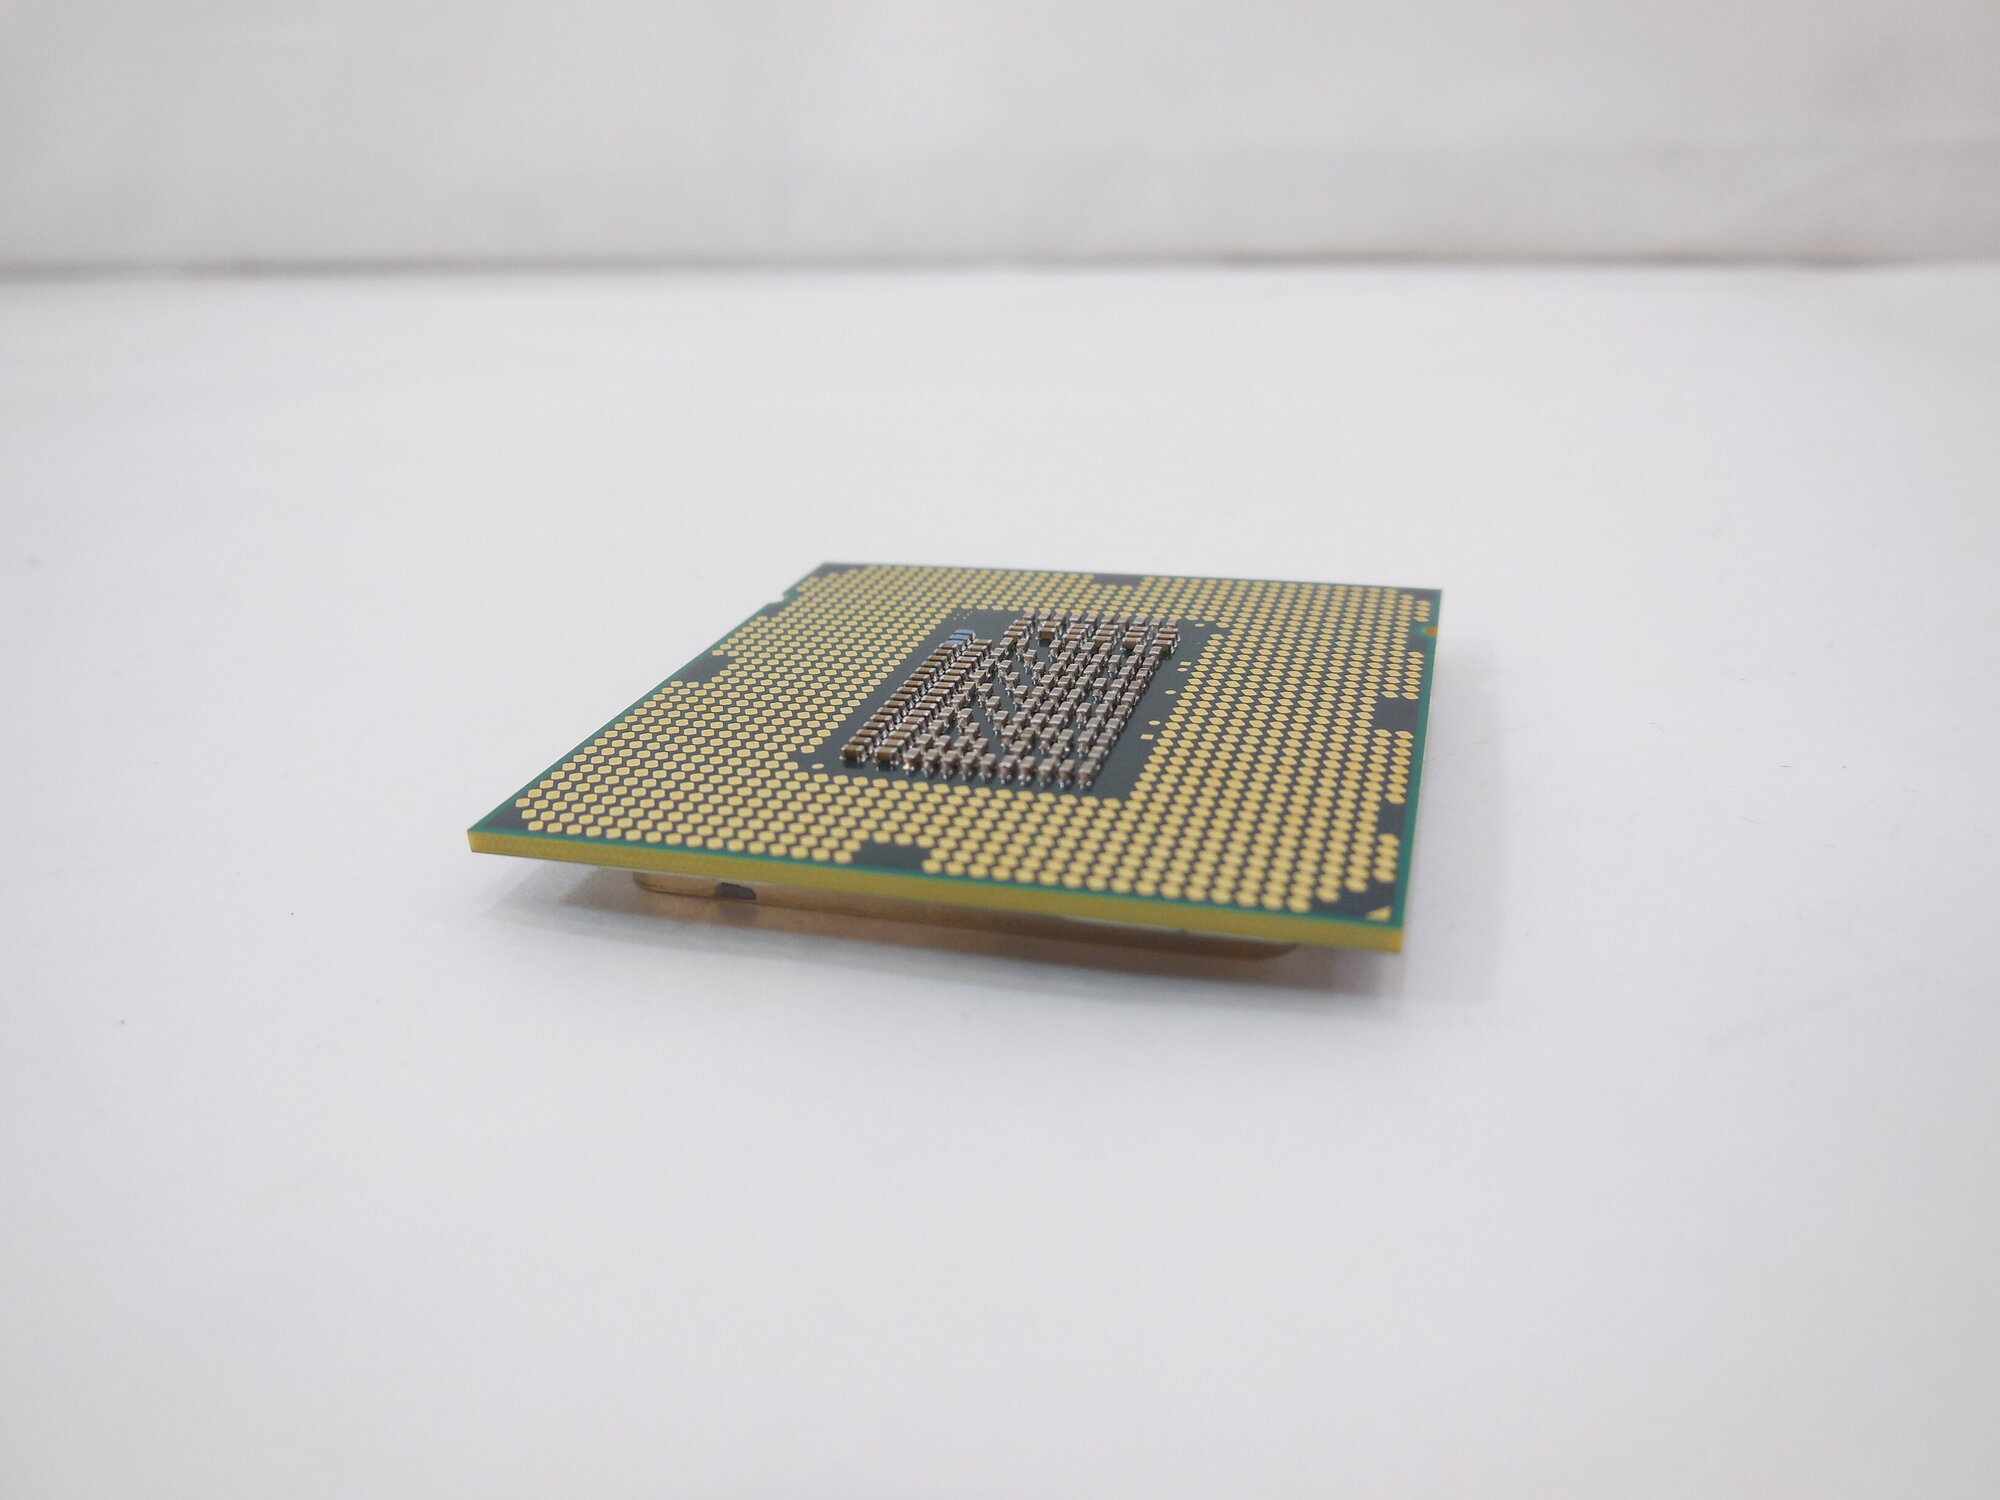 Процессор Intel Core i5-2300 Sandy Bridge LGA1155 4 x 2800 МГц